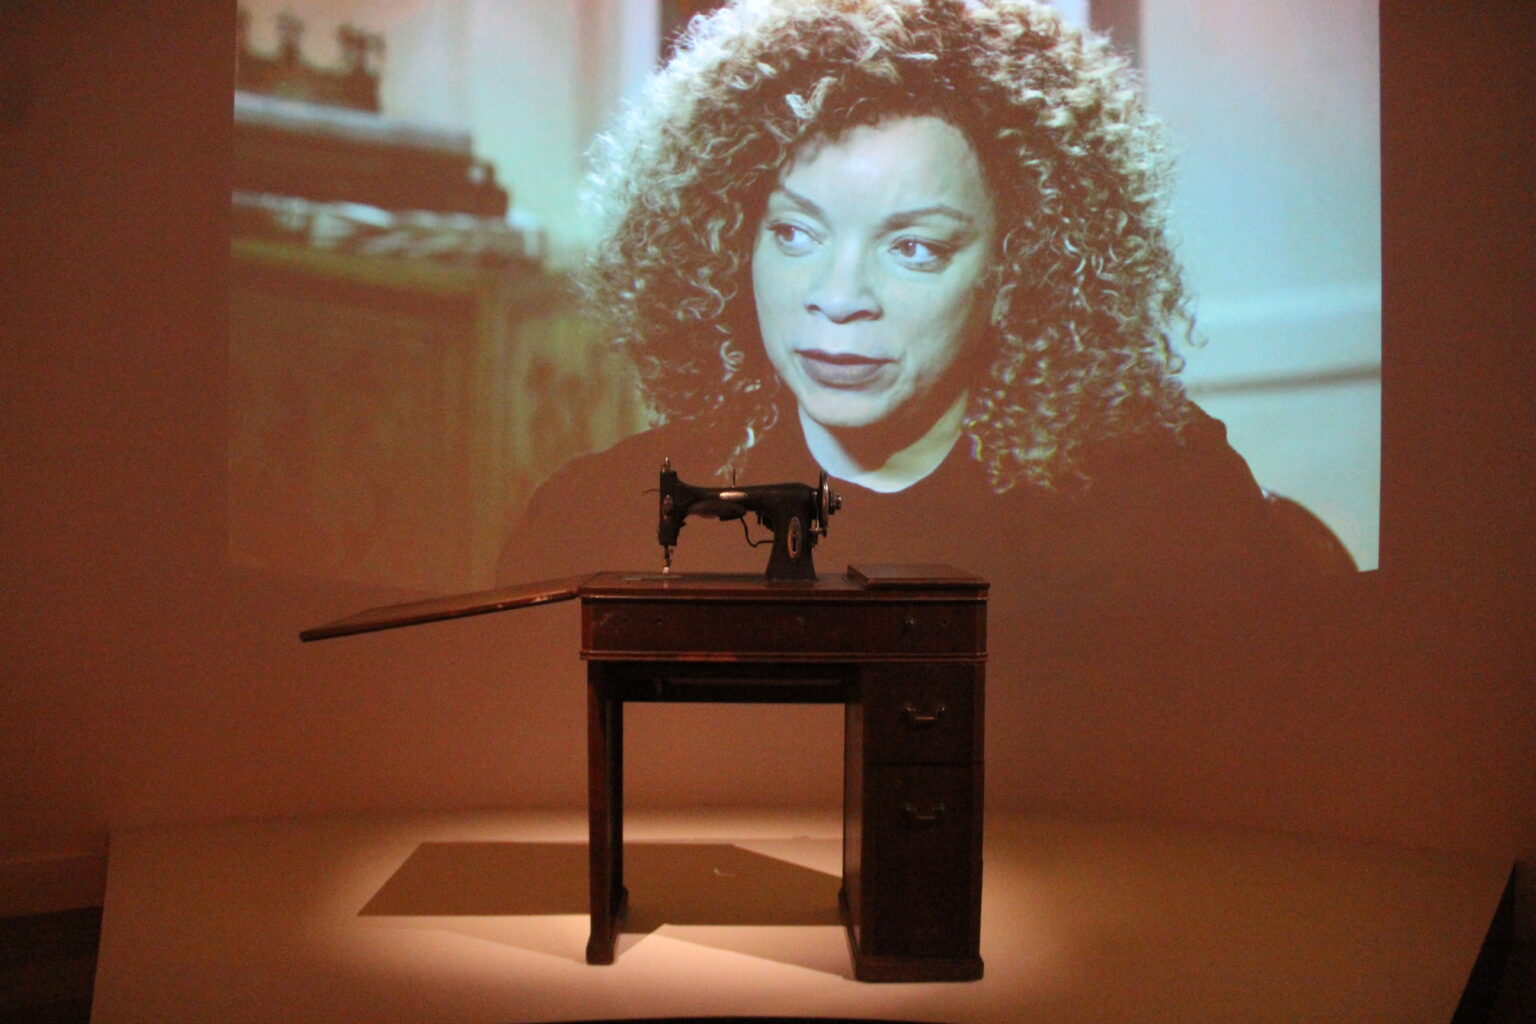 Get Afrofuturistic at the SCAD FASH Ruth E. Carter Exhibit (PHOTOS